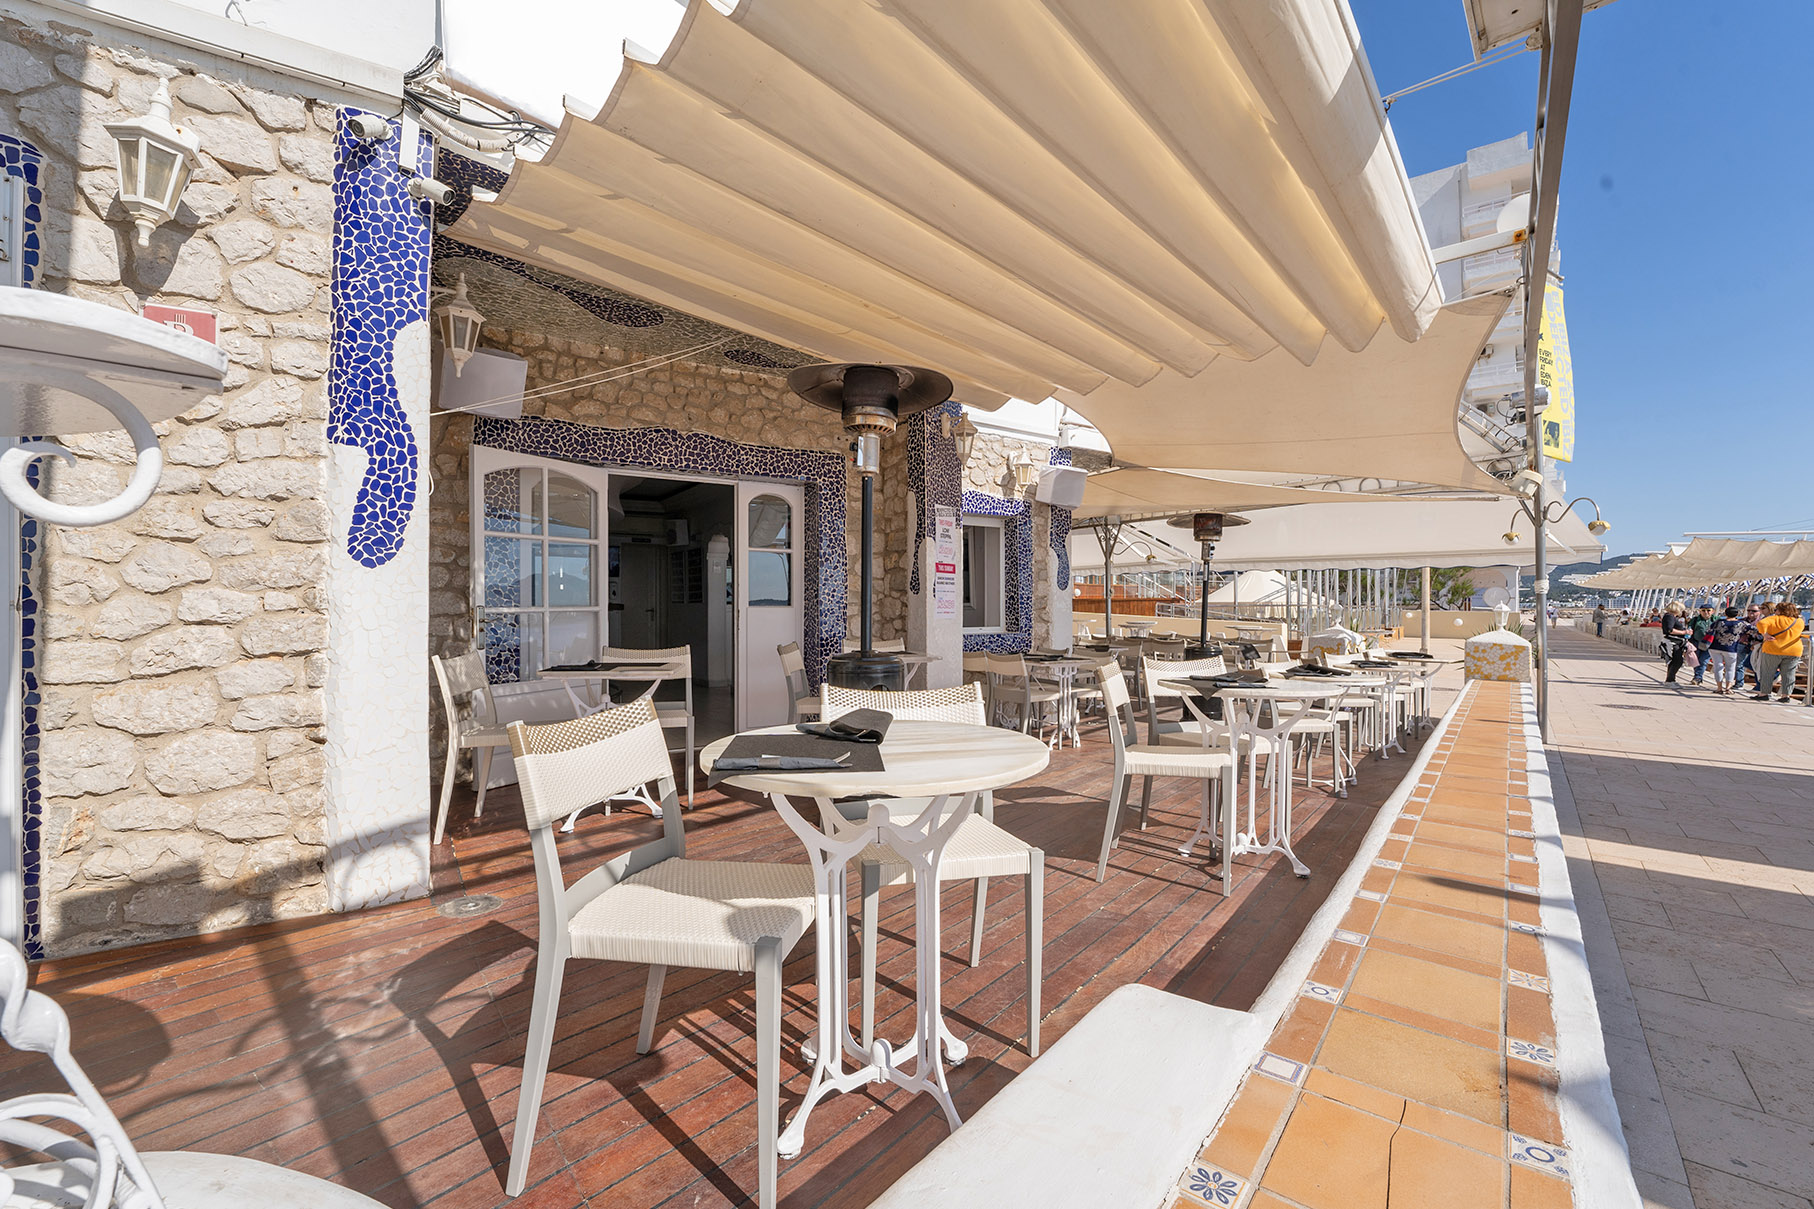 Cafe Mambo Ibiza Seafront